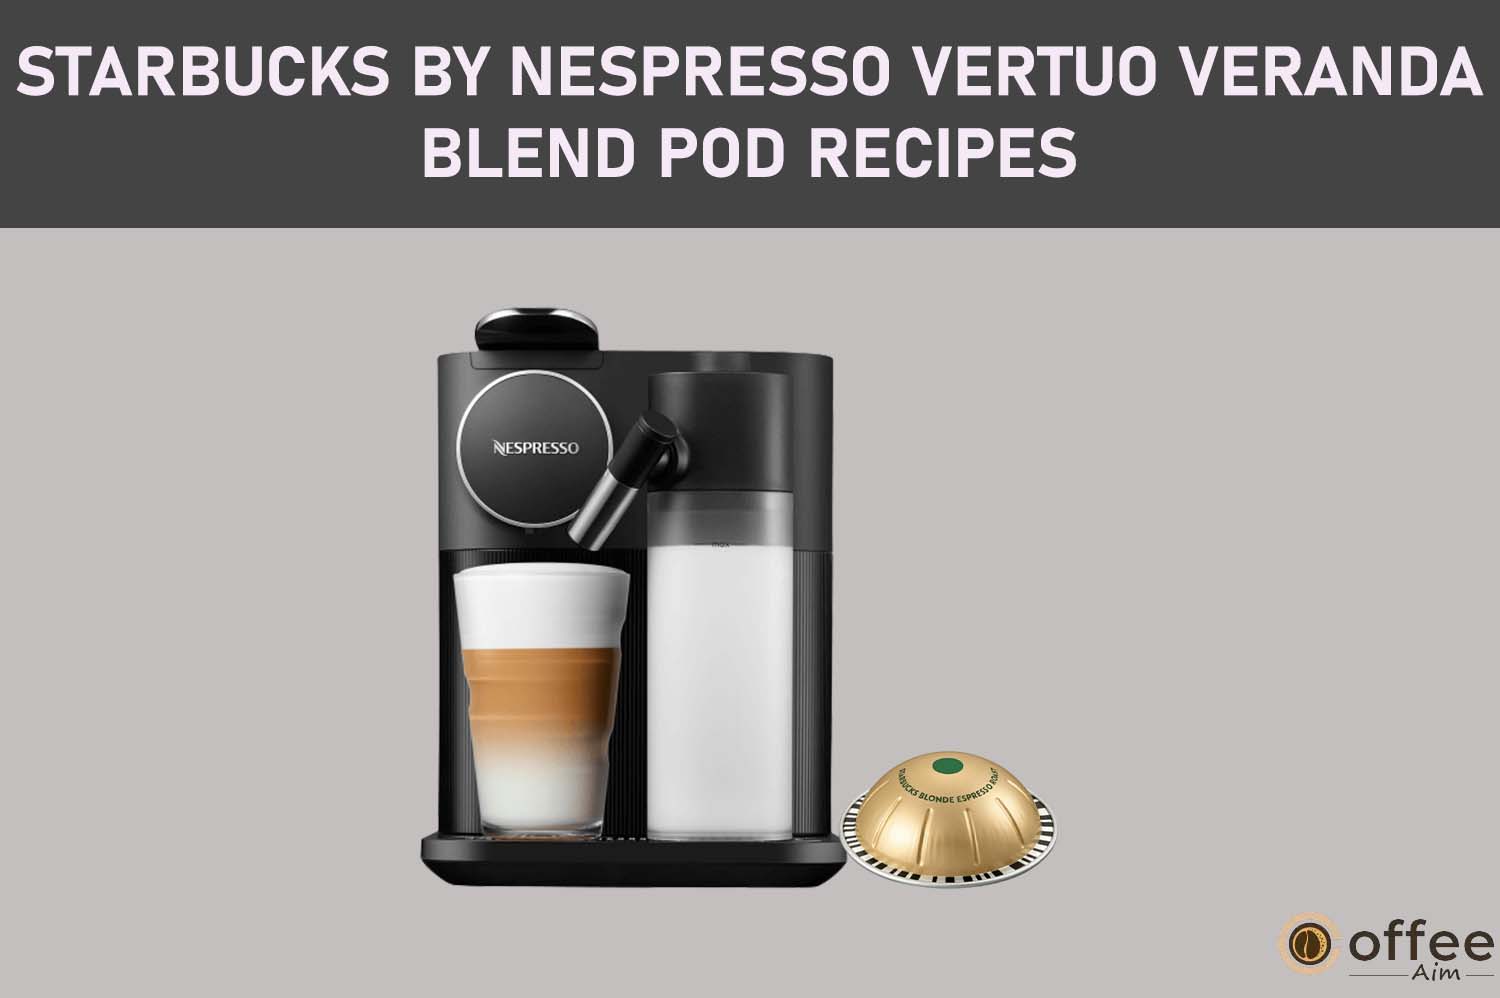 Featured image for the article "Starbucks by Nespresso Vertuo Veranda Blend Pod Recipes"